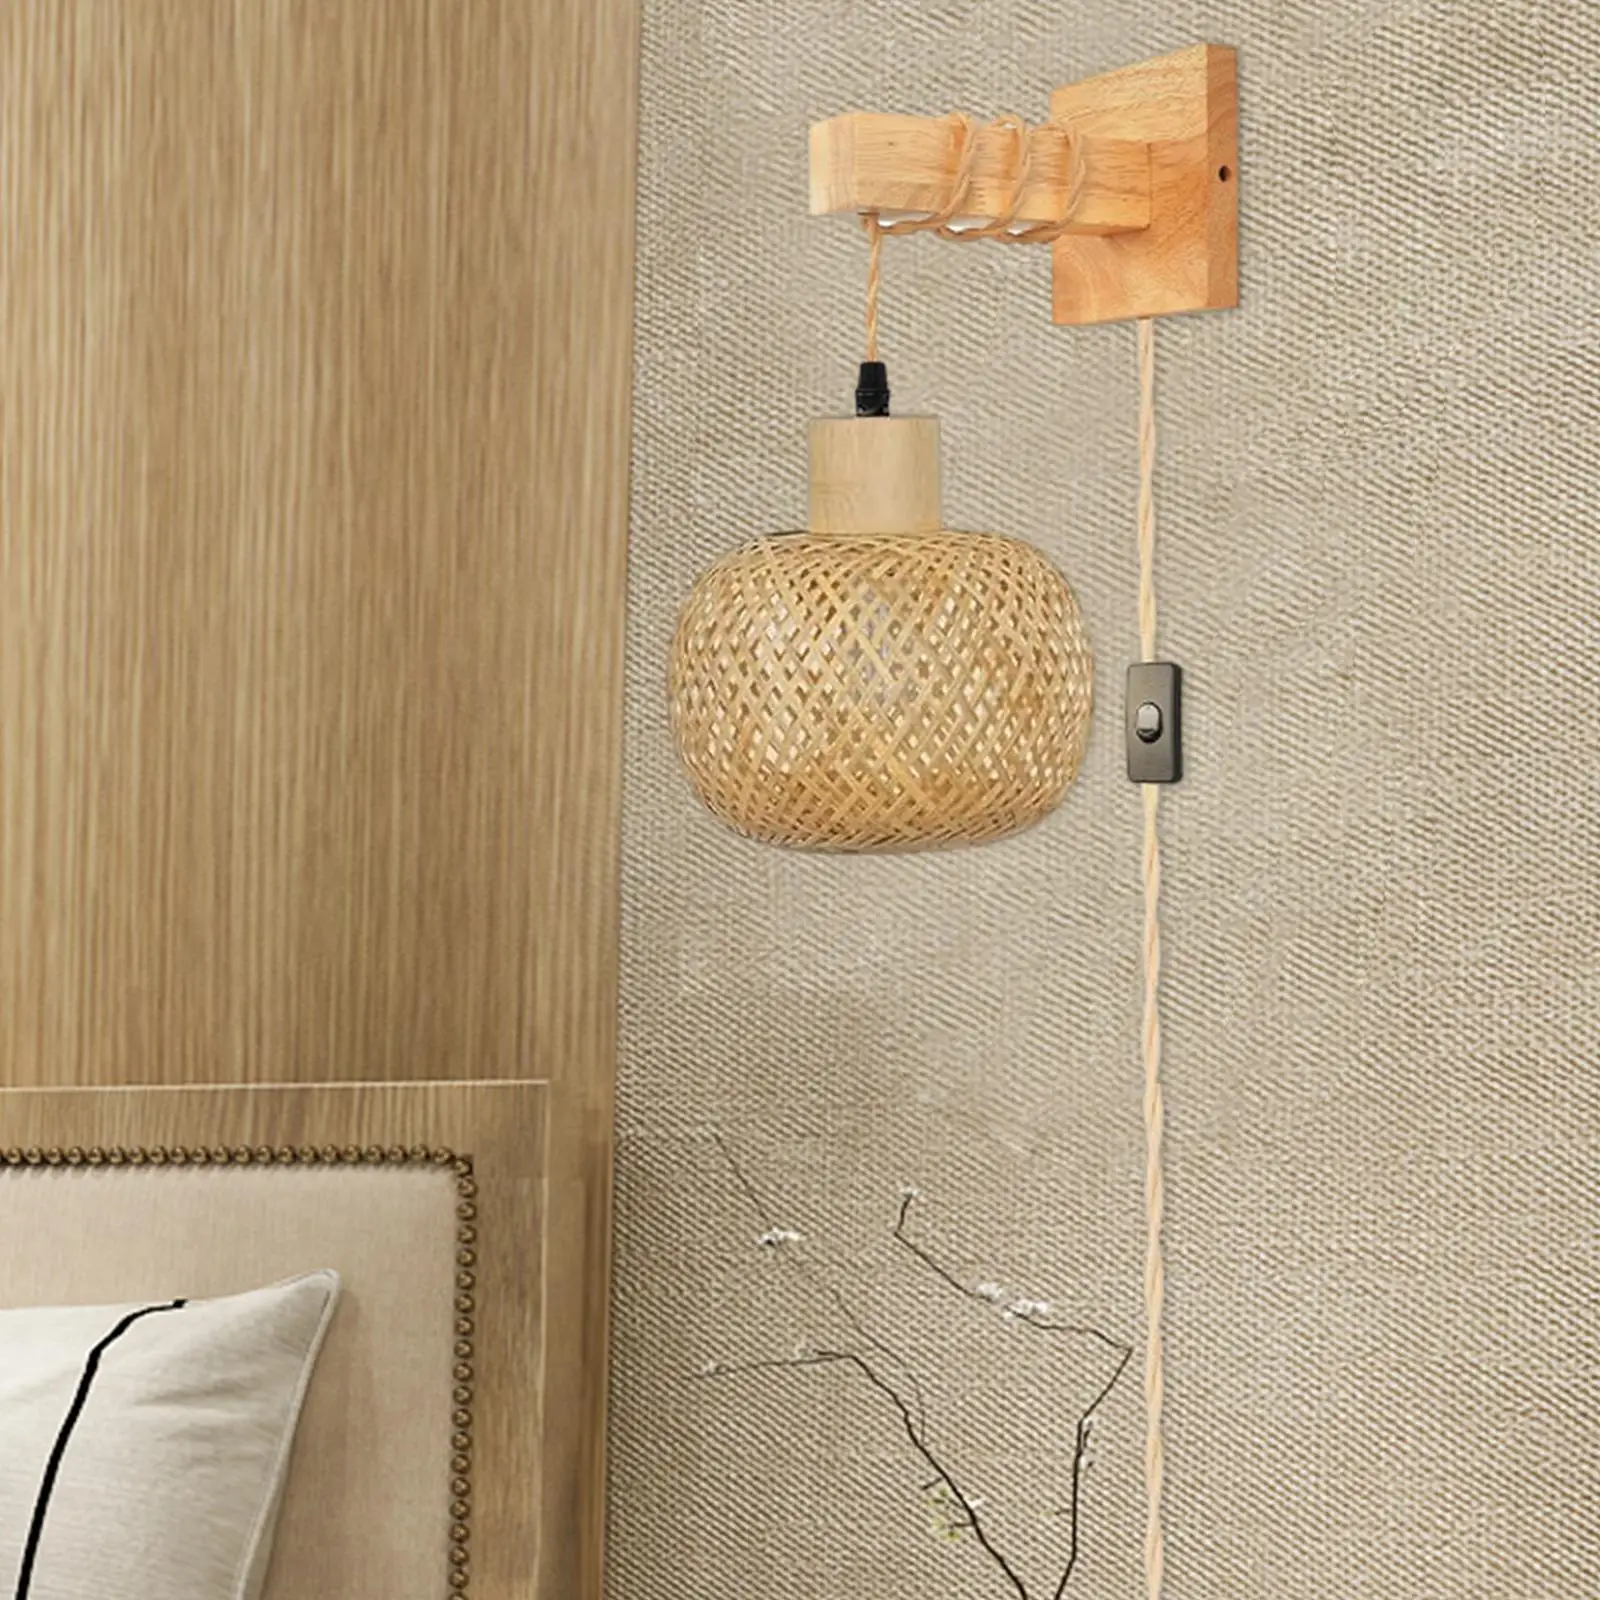 Bamboo Wall Sconce Decorative Bedside Light Fixture Bathroom Vanity Wall Light for Restaurant Bathroom Bedroom Home Hallway